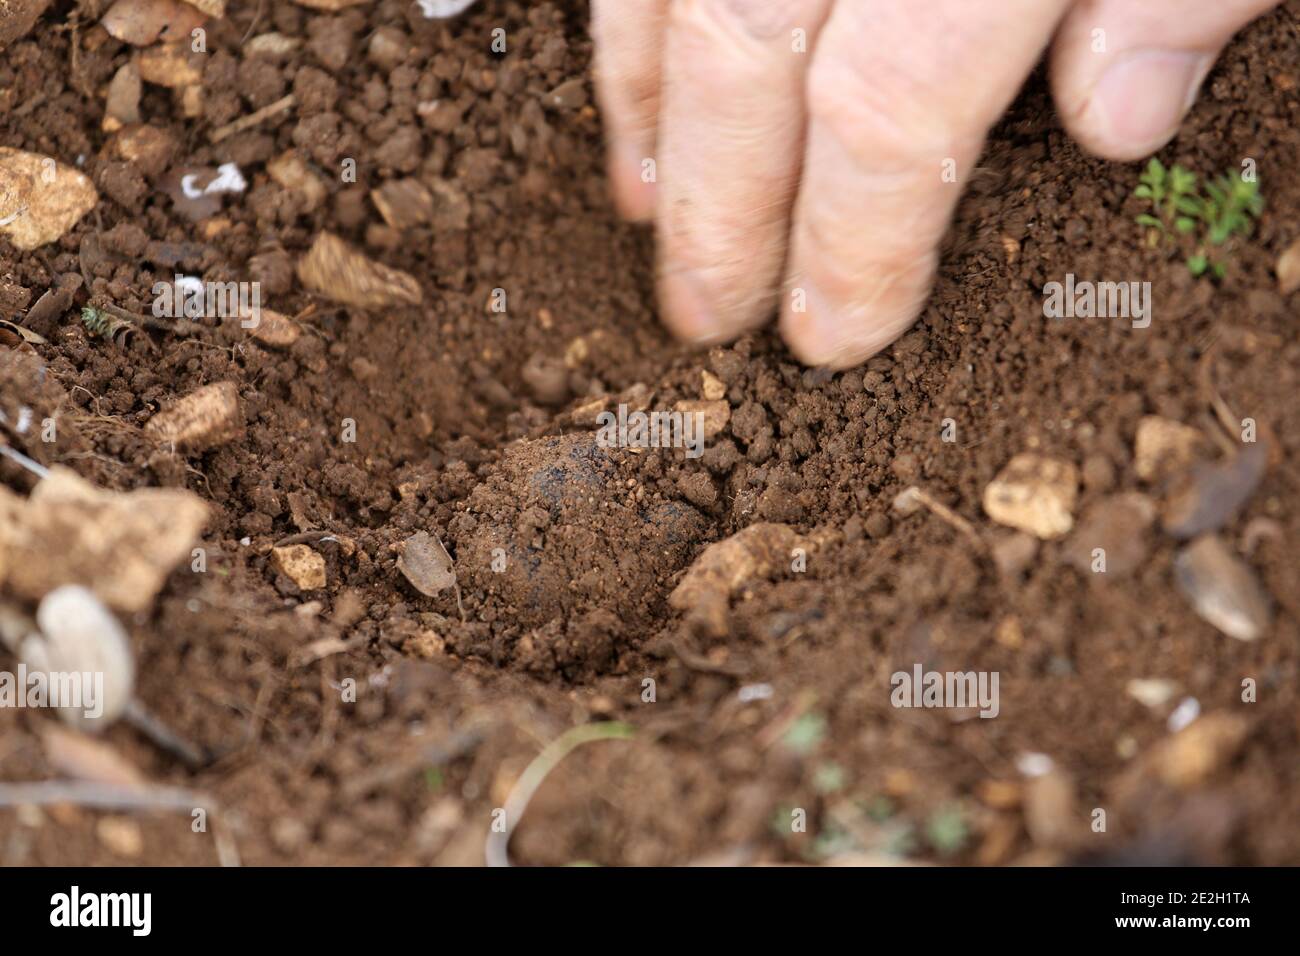 Harvesting of black truffles (tuber melanosporum) from the Perigord area. Hand unearthing a truffle from the ground Stock Photo